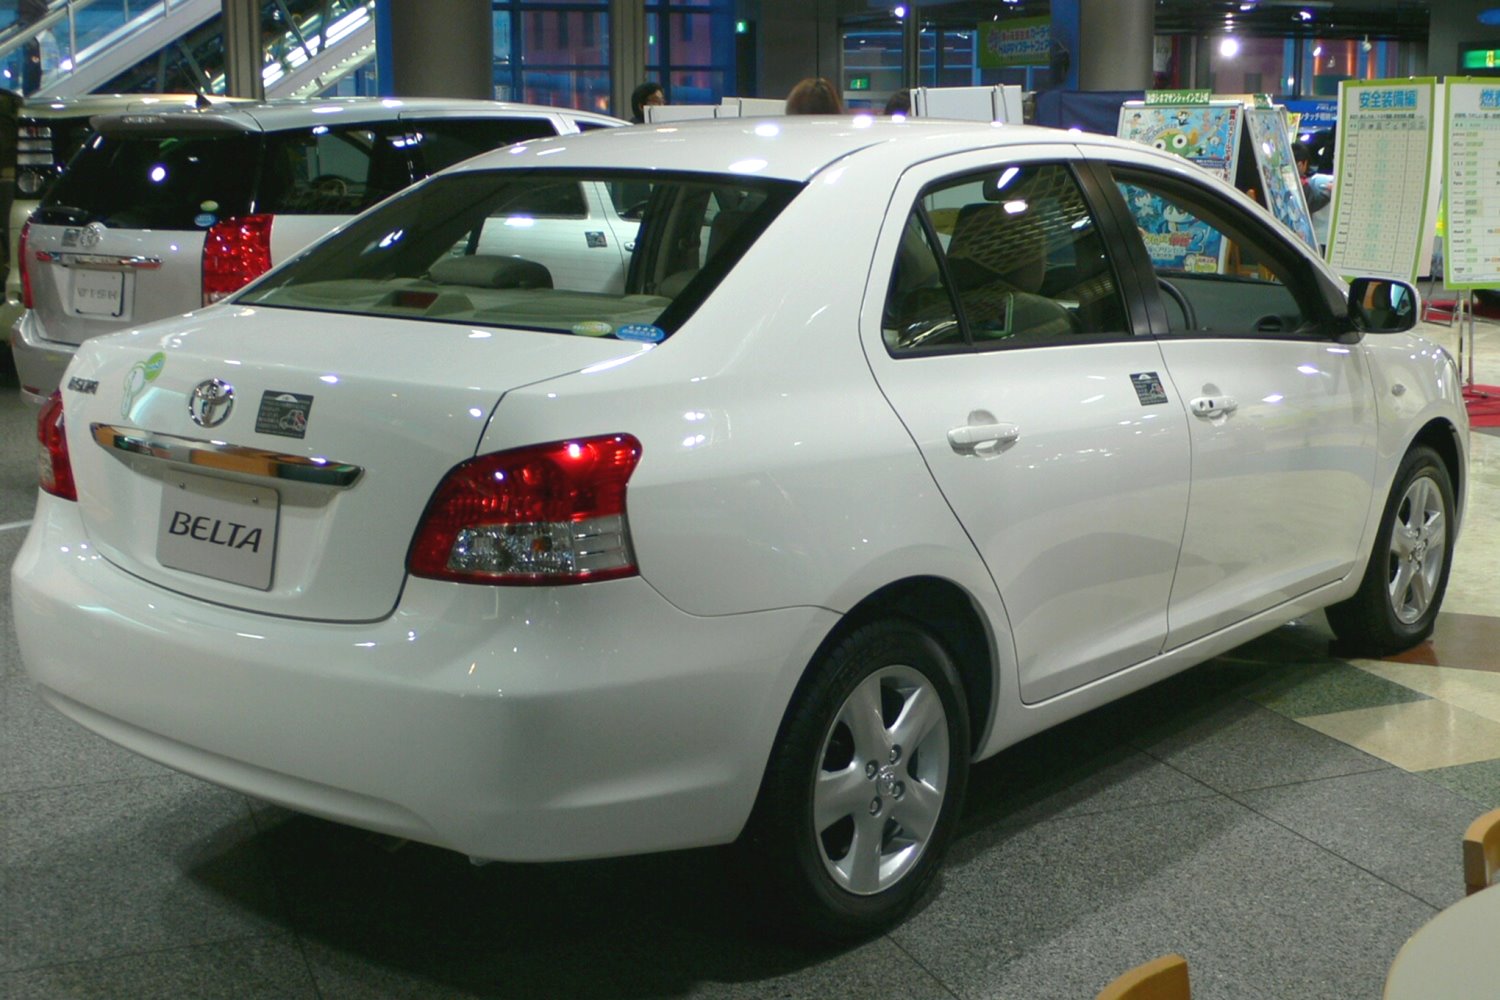 Toyota Belta  Car Models